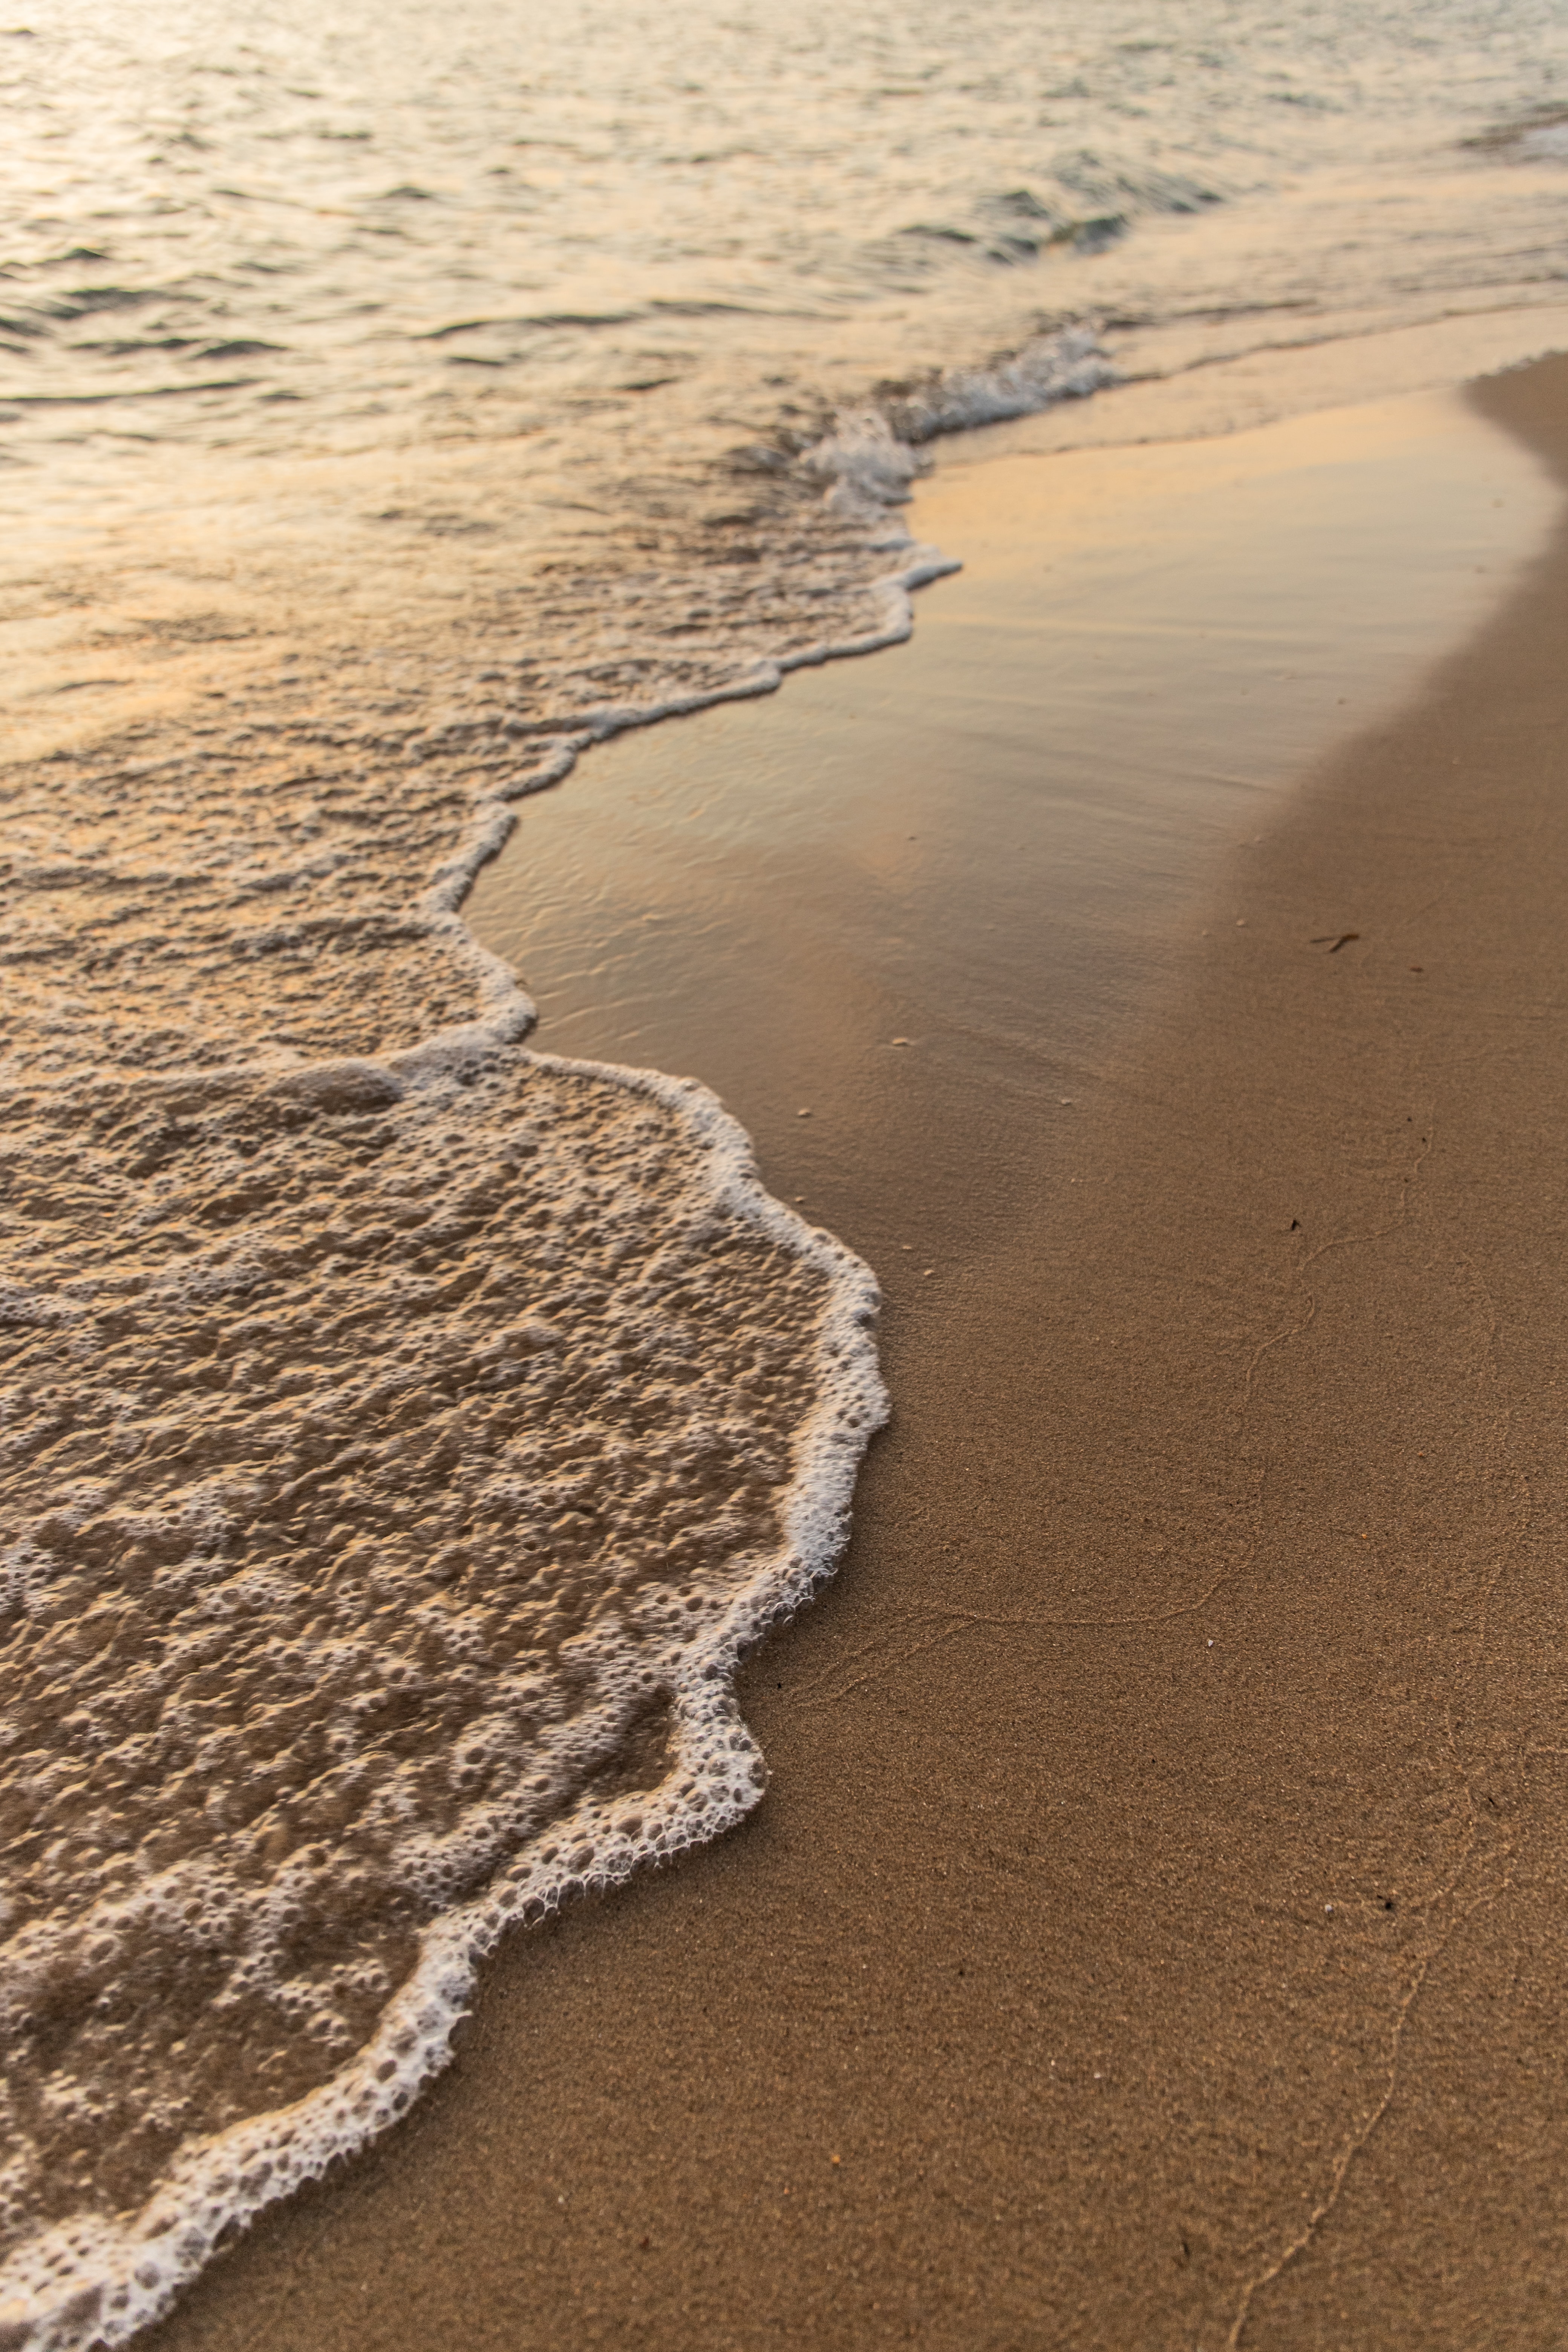 154750 descargar imagen naturaleza, agua, mar, playa, arena, onda, ola: fondos de pantalla y protectores de pantalla gratis